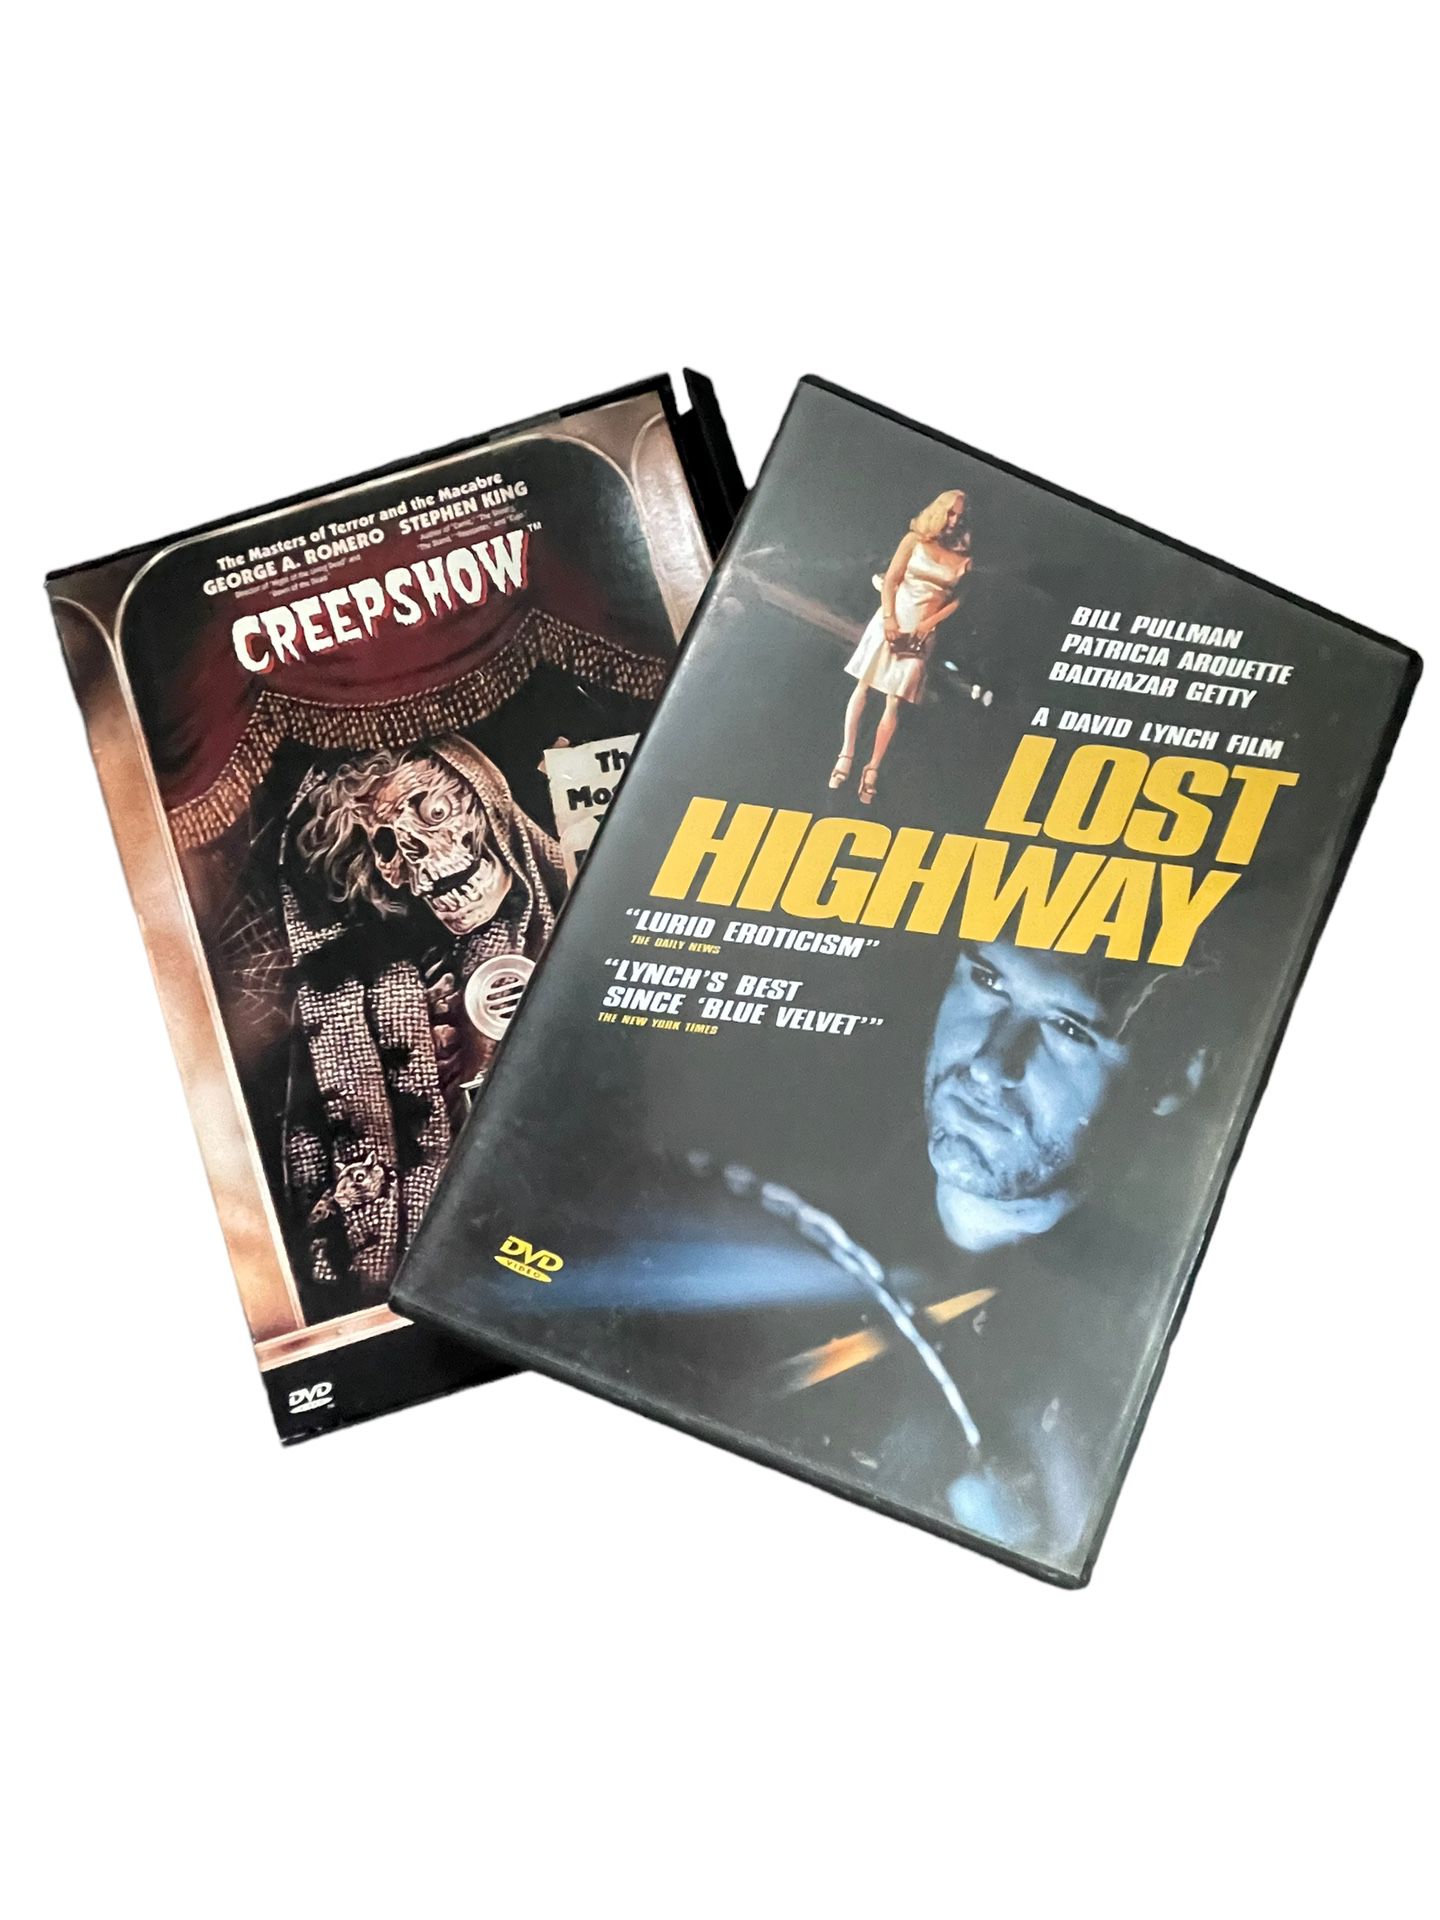 Lot of 2 Horror DVD’s Creepshow Lost Highway